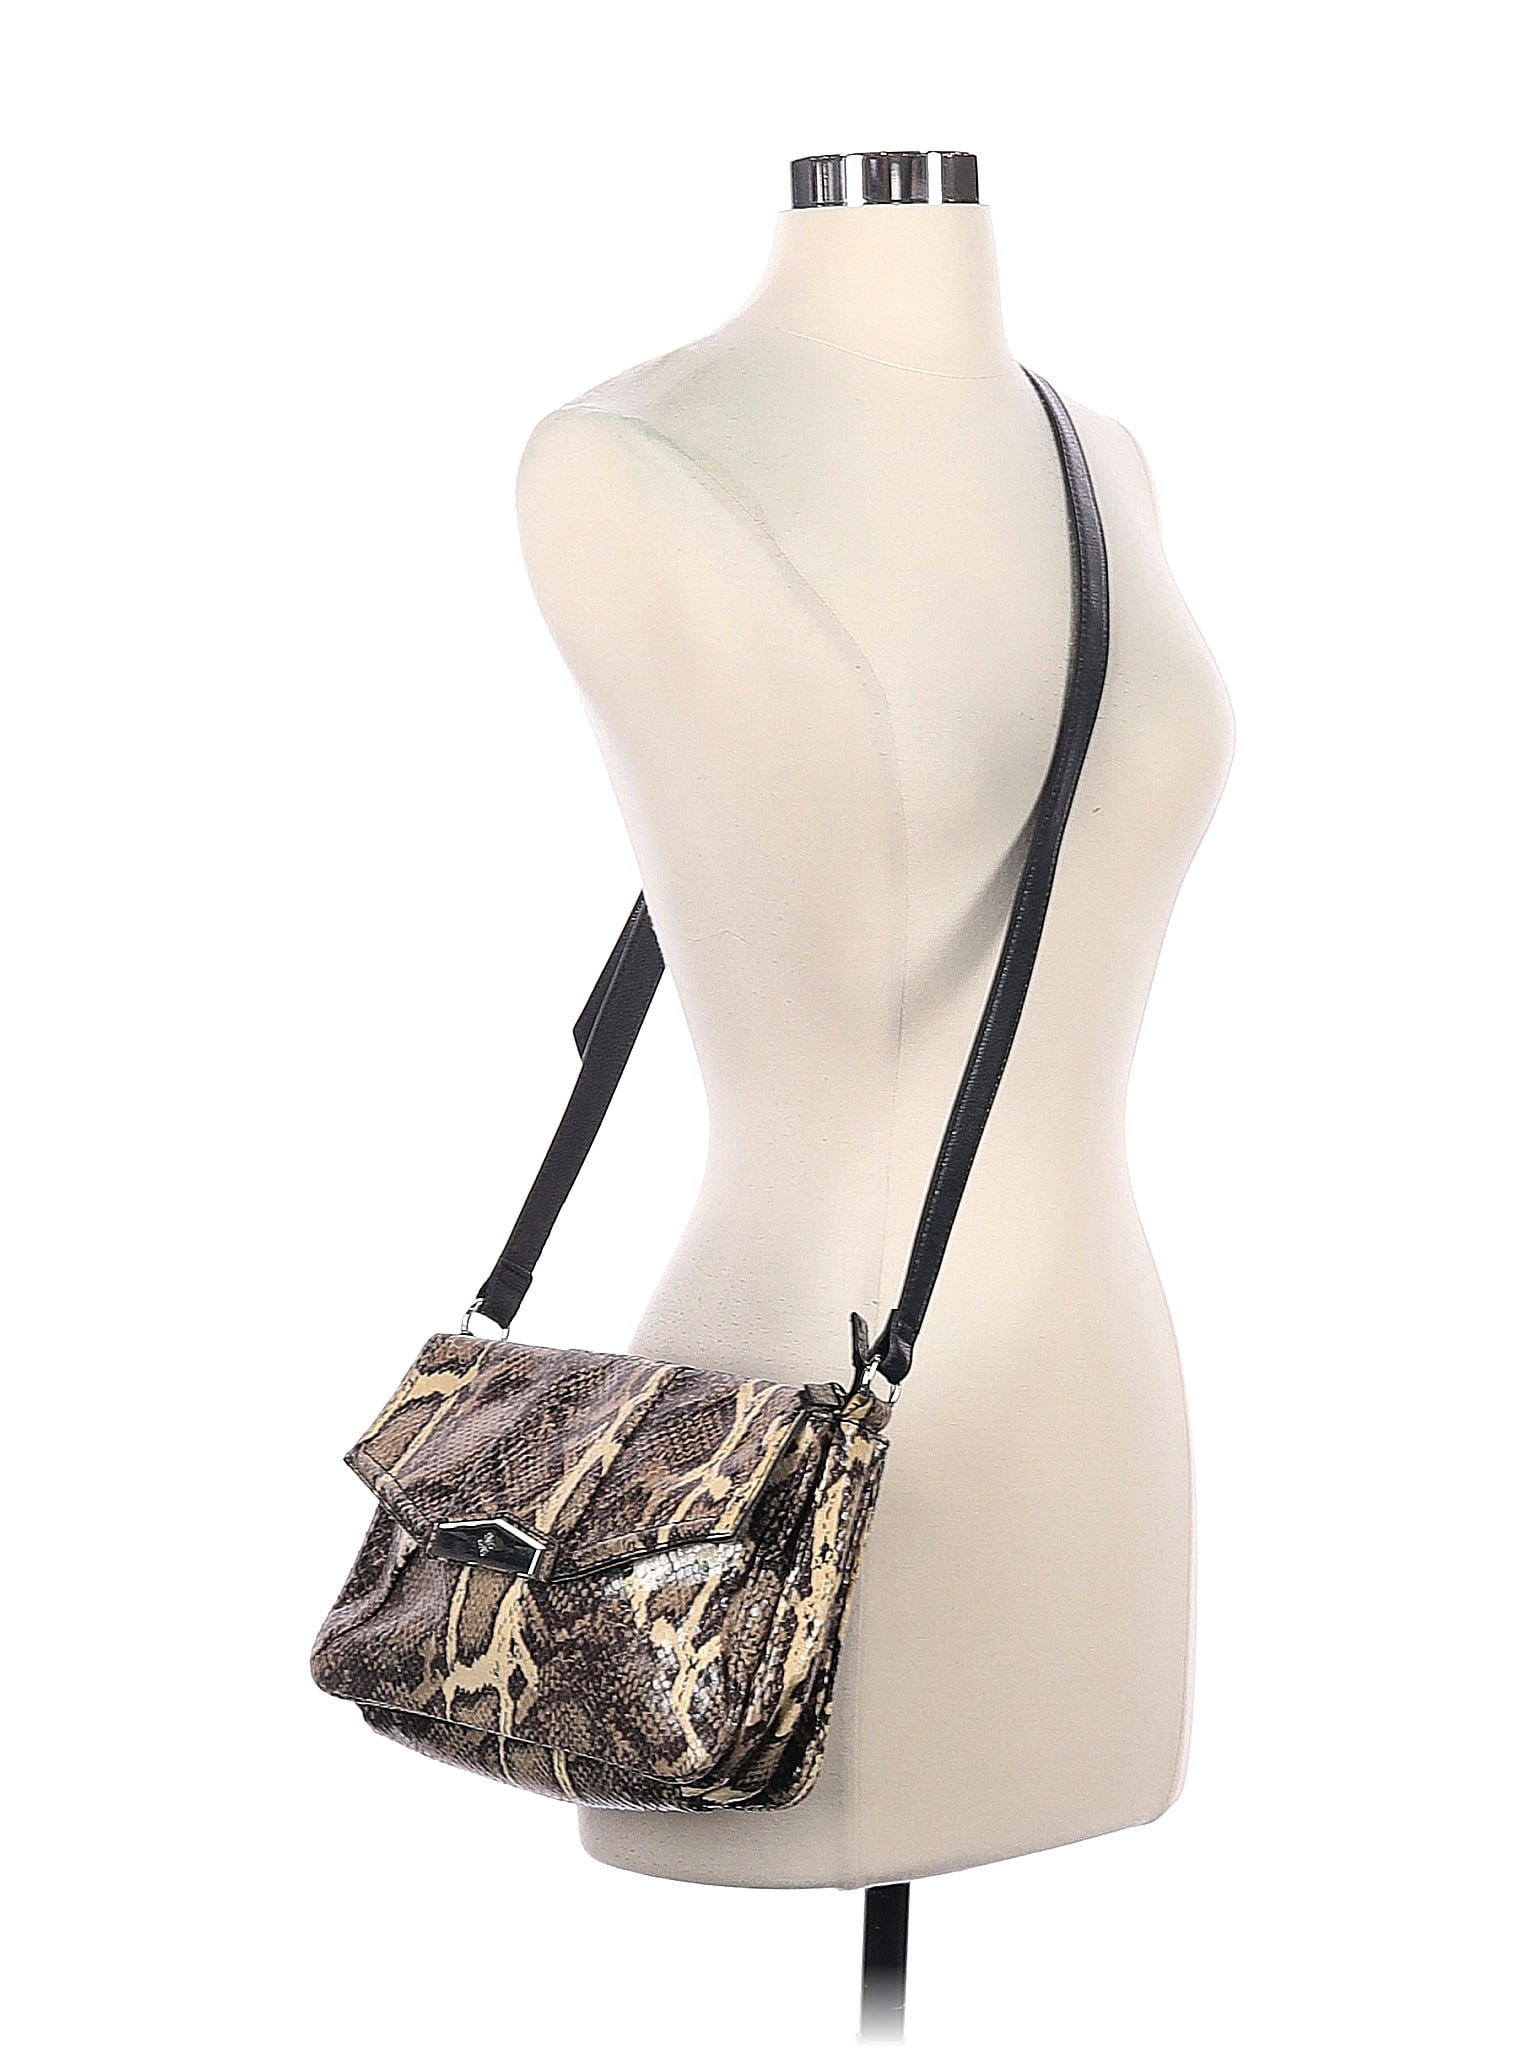 Simply Vera Vera Wang Snakeskin Print Handbag Shoulder Bag Purse